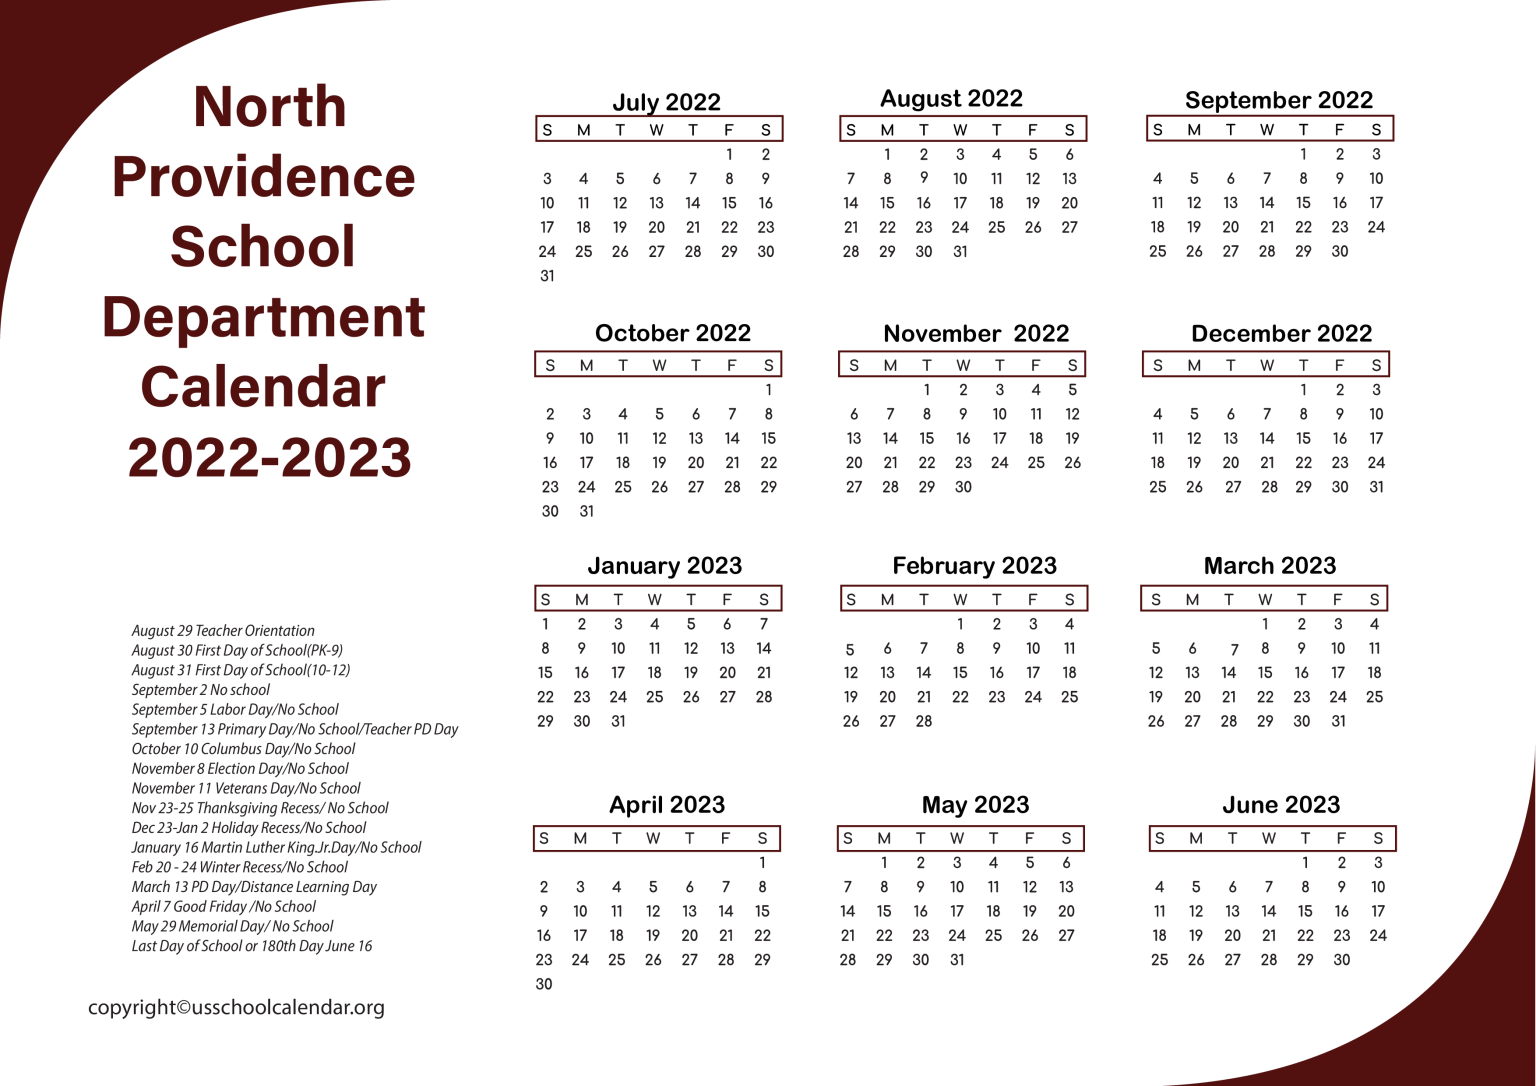  NPROV North Providence School Department Calendar 2023